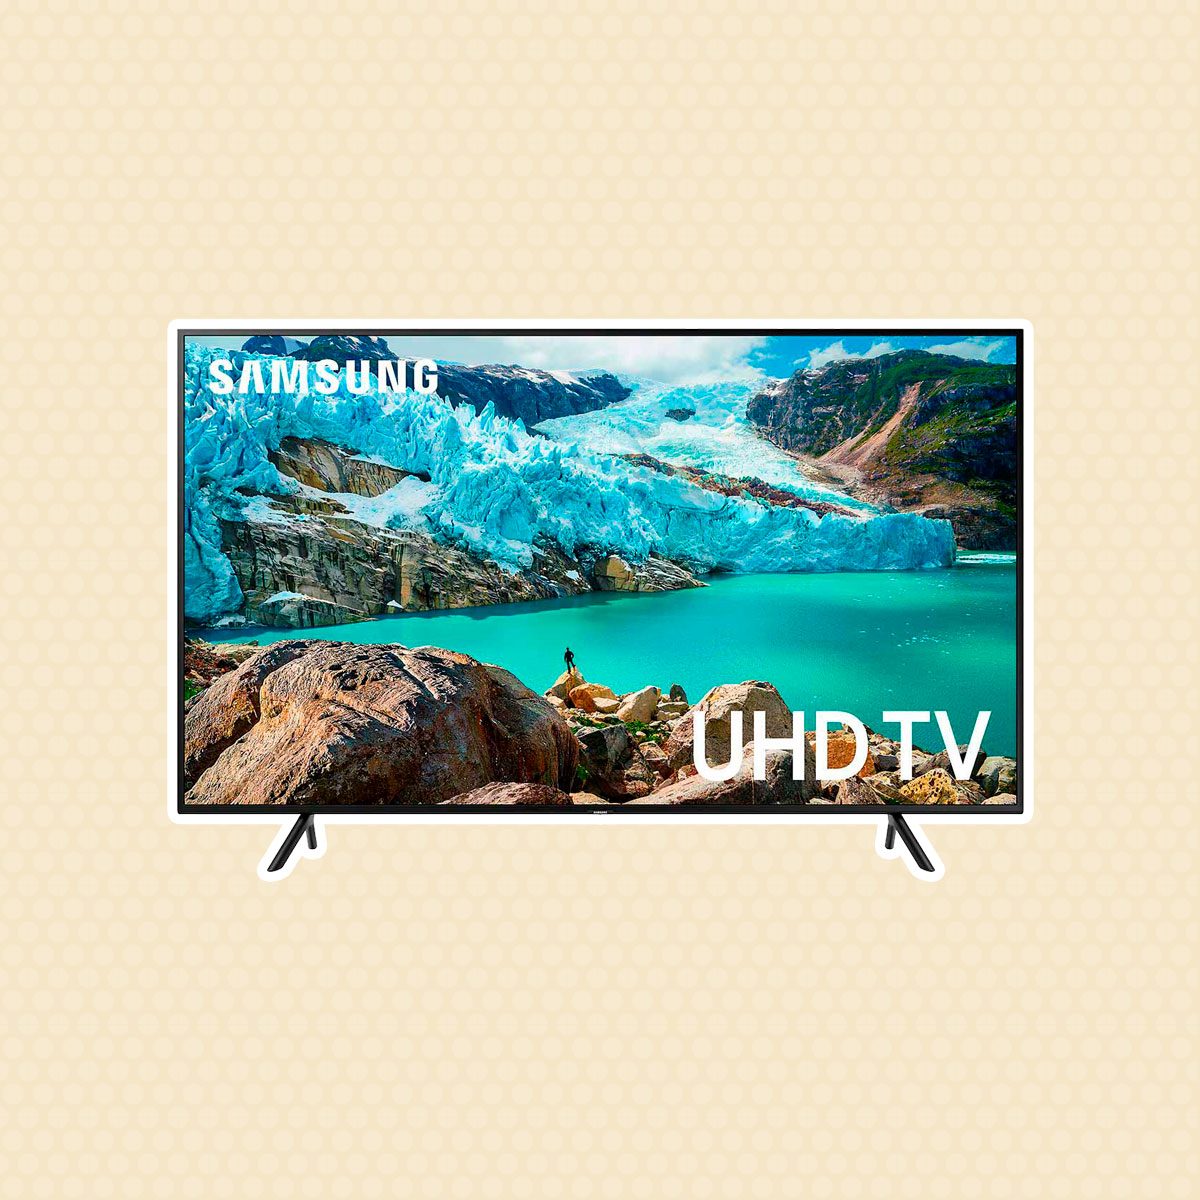 Samsung Television